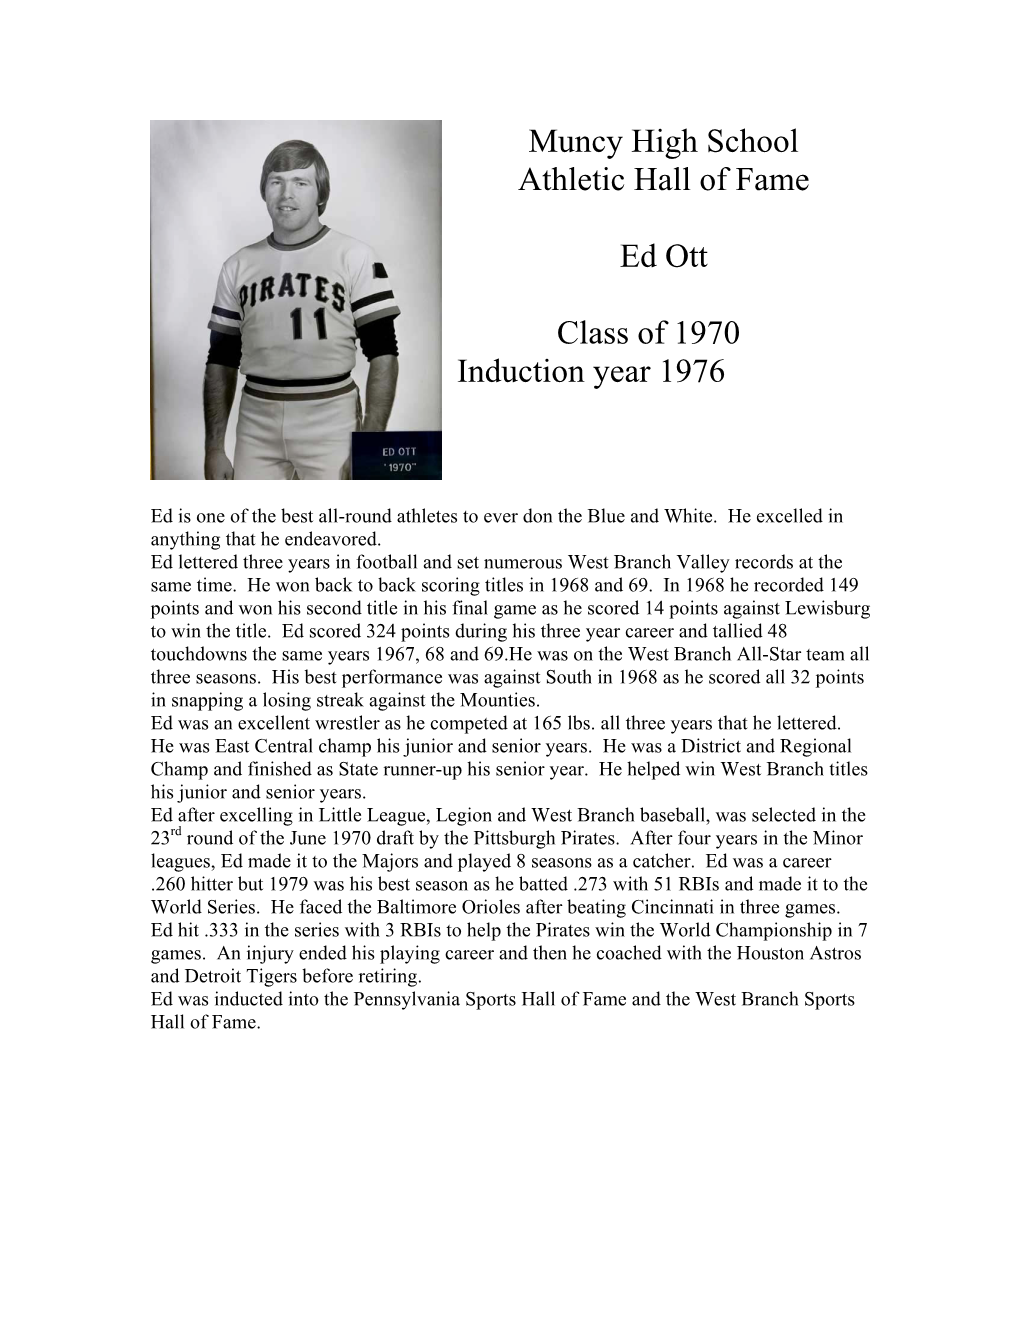 Muncy High School Athletic Hall of Fame Ed Ott Class of 1970